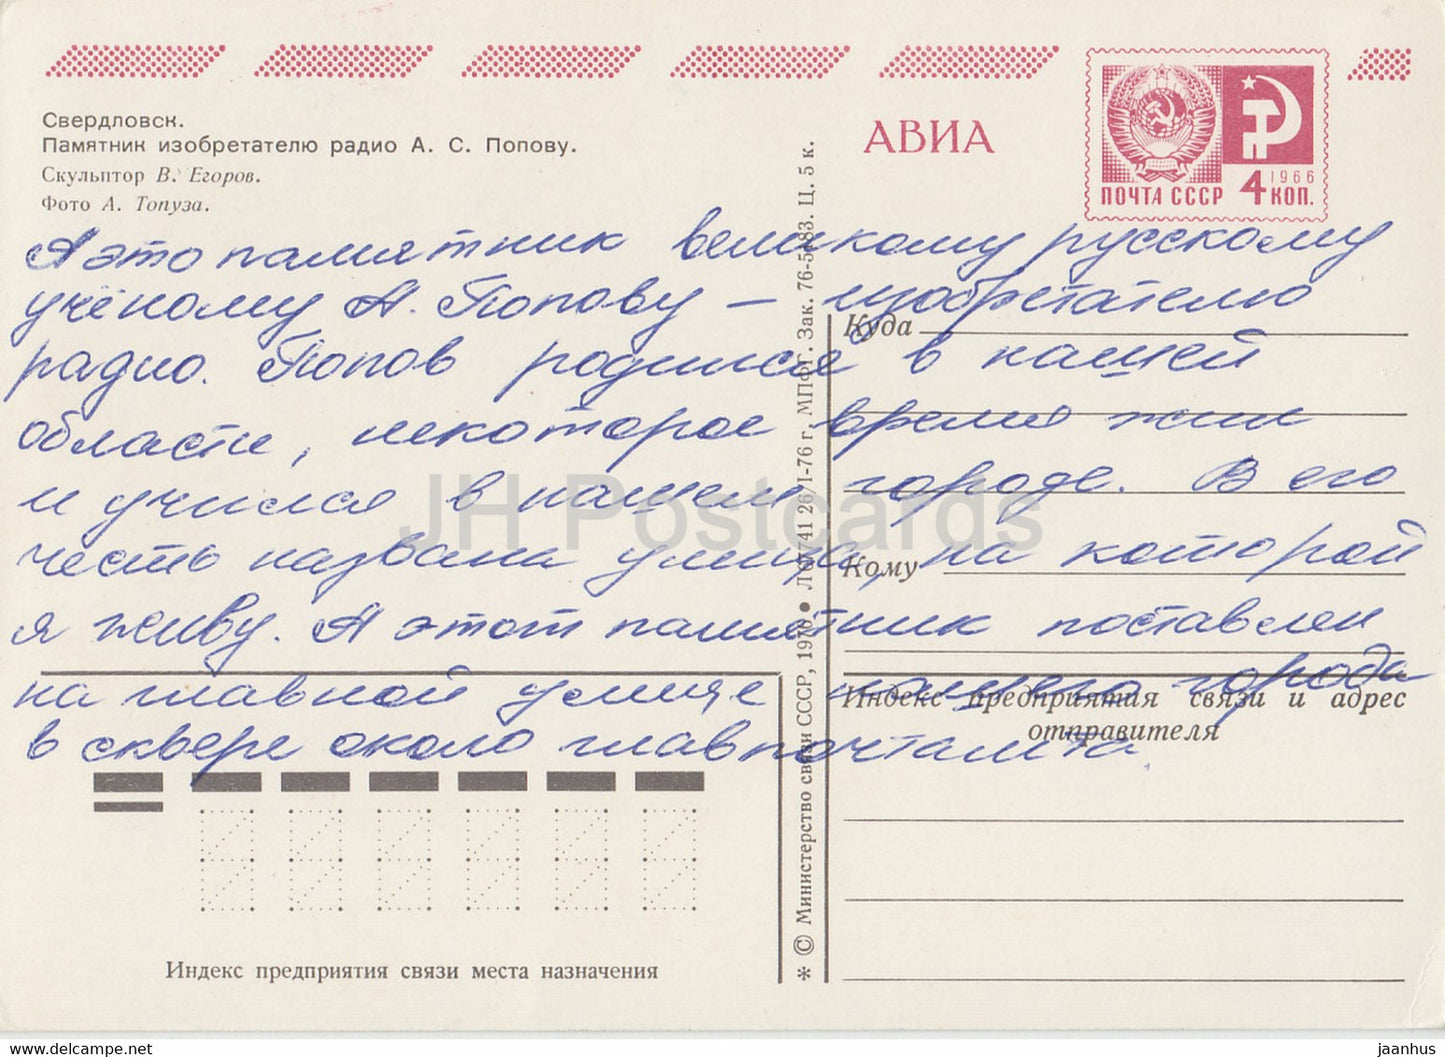 Sverdlovsk monument to Radio inventor Popov - AVIA - postal stationery - 1970 - Russia USSR - used